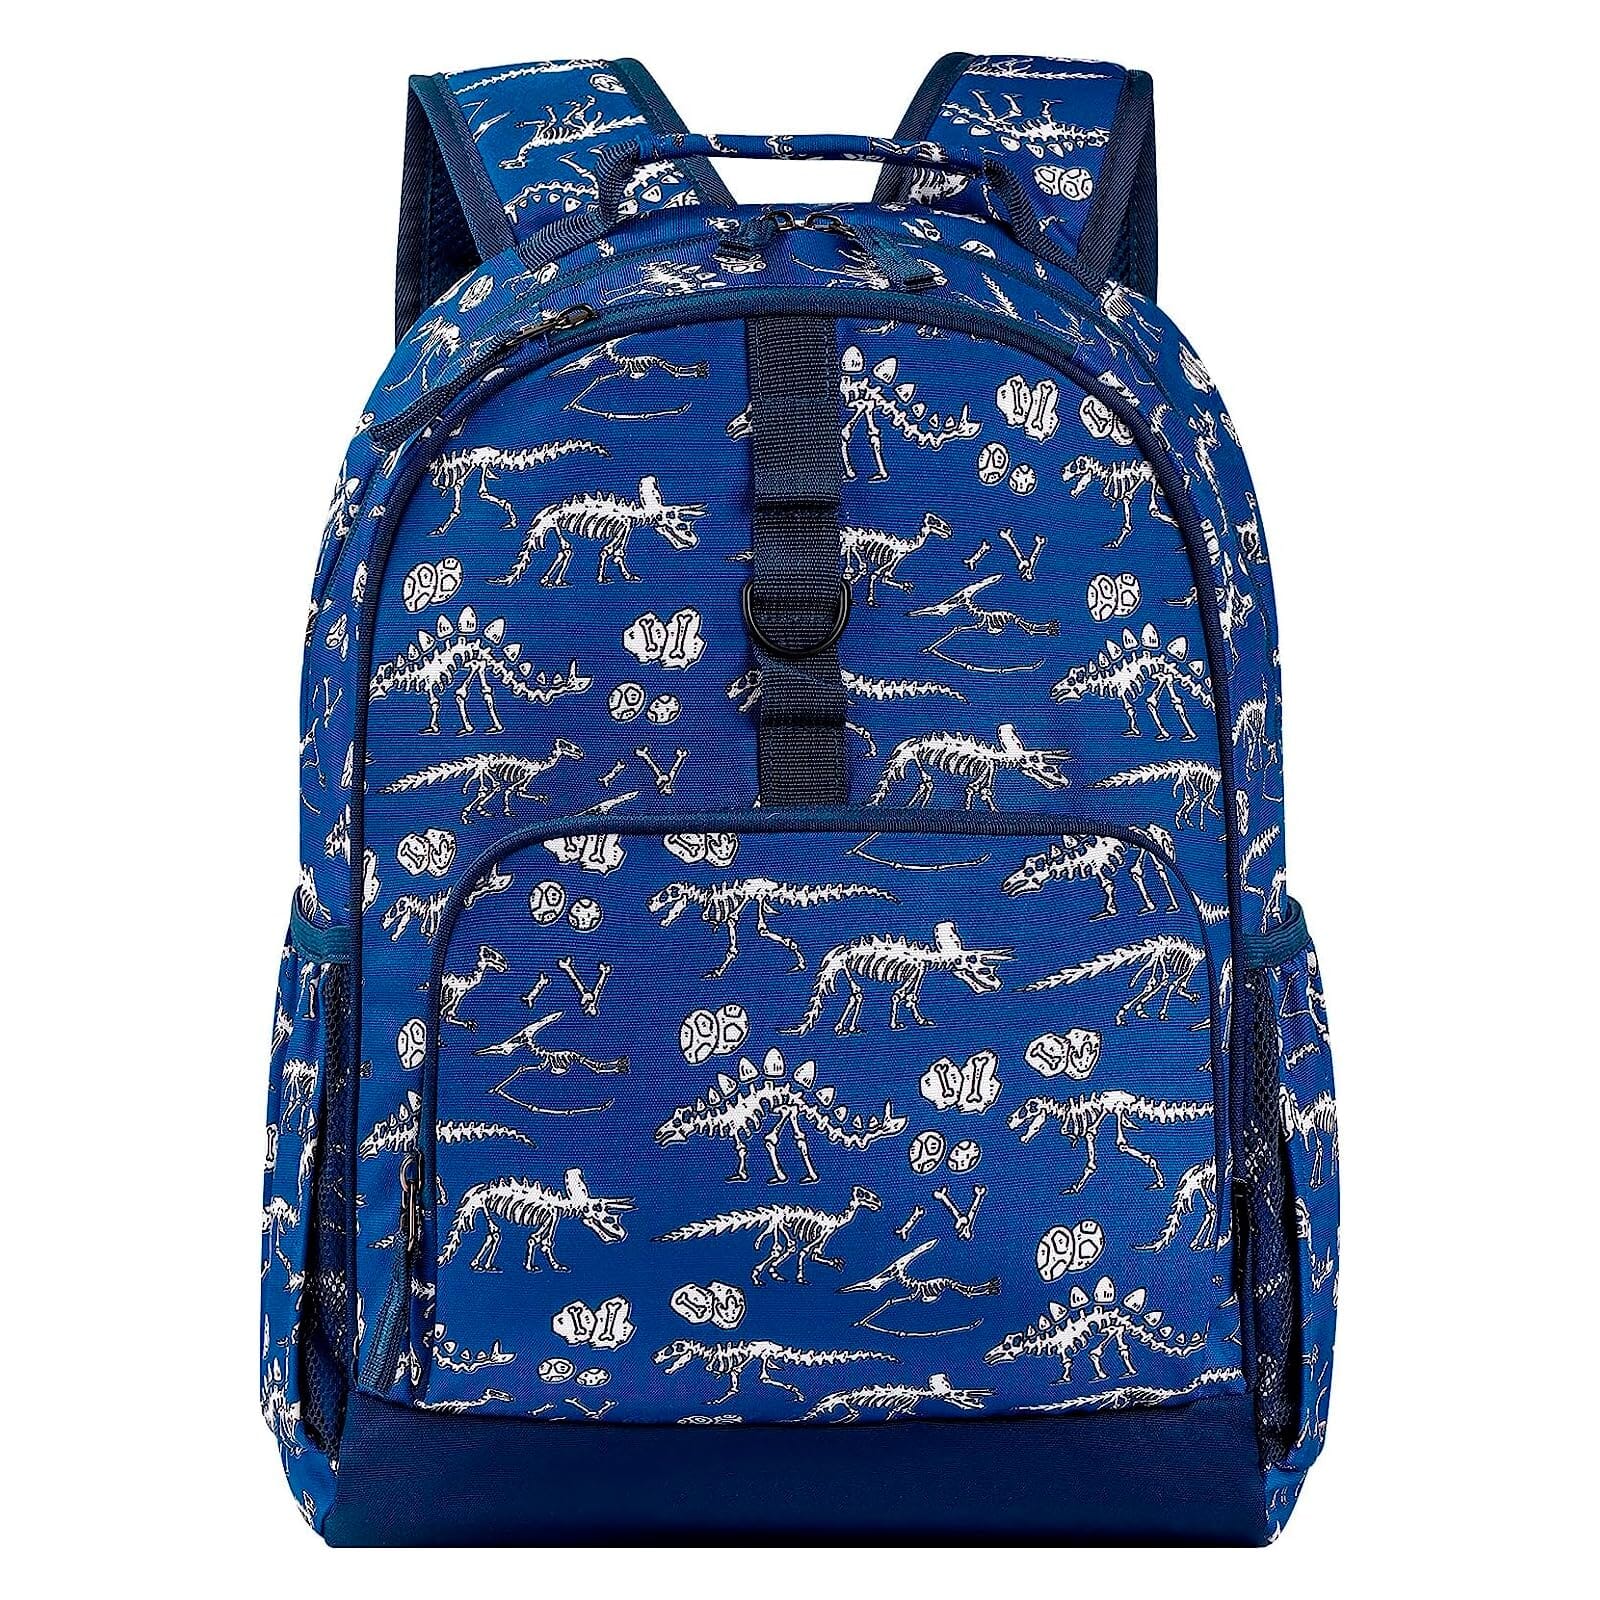 Choco Mocha Dinosaur Bone Backpack for Boys Backpacks for Elementary School Backpack for Kids Backpack Boys 17 inch Backpack for Boys Fossil Bookbag with Chest Strap 5-7 6-8 3rd Grade Blue chocomochakids 